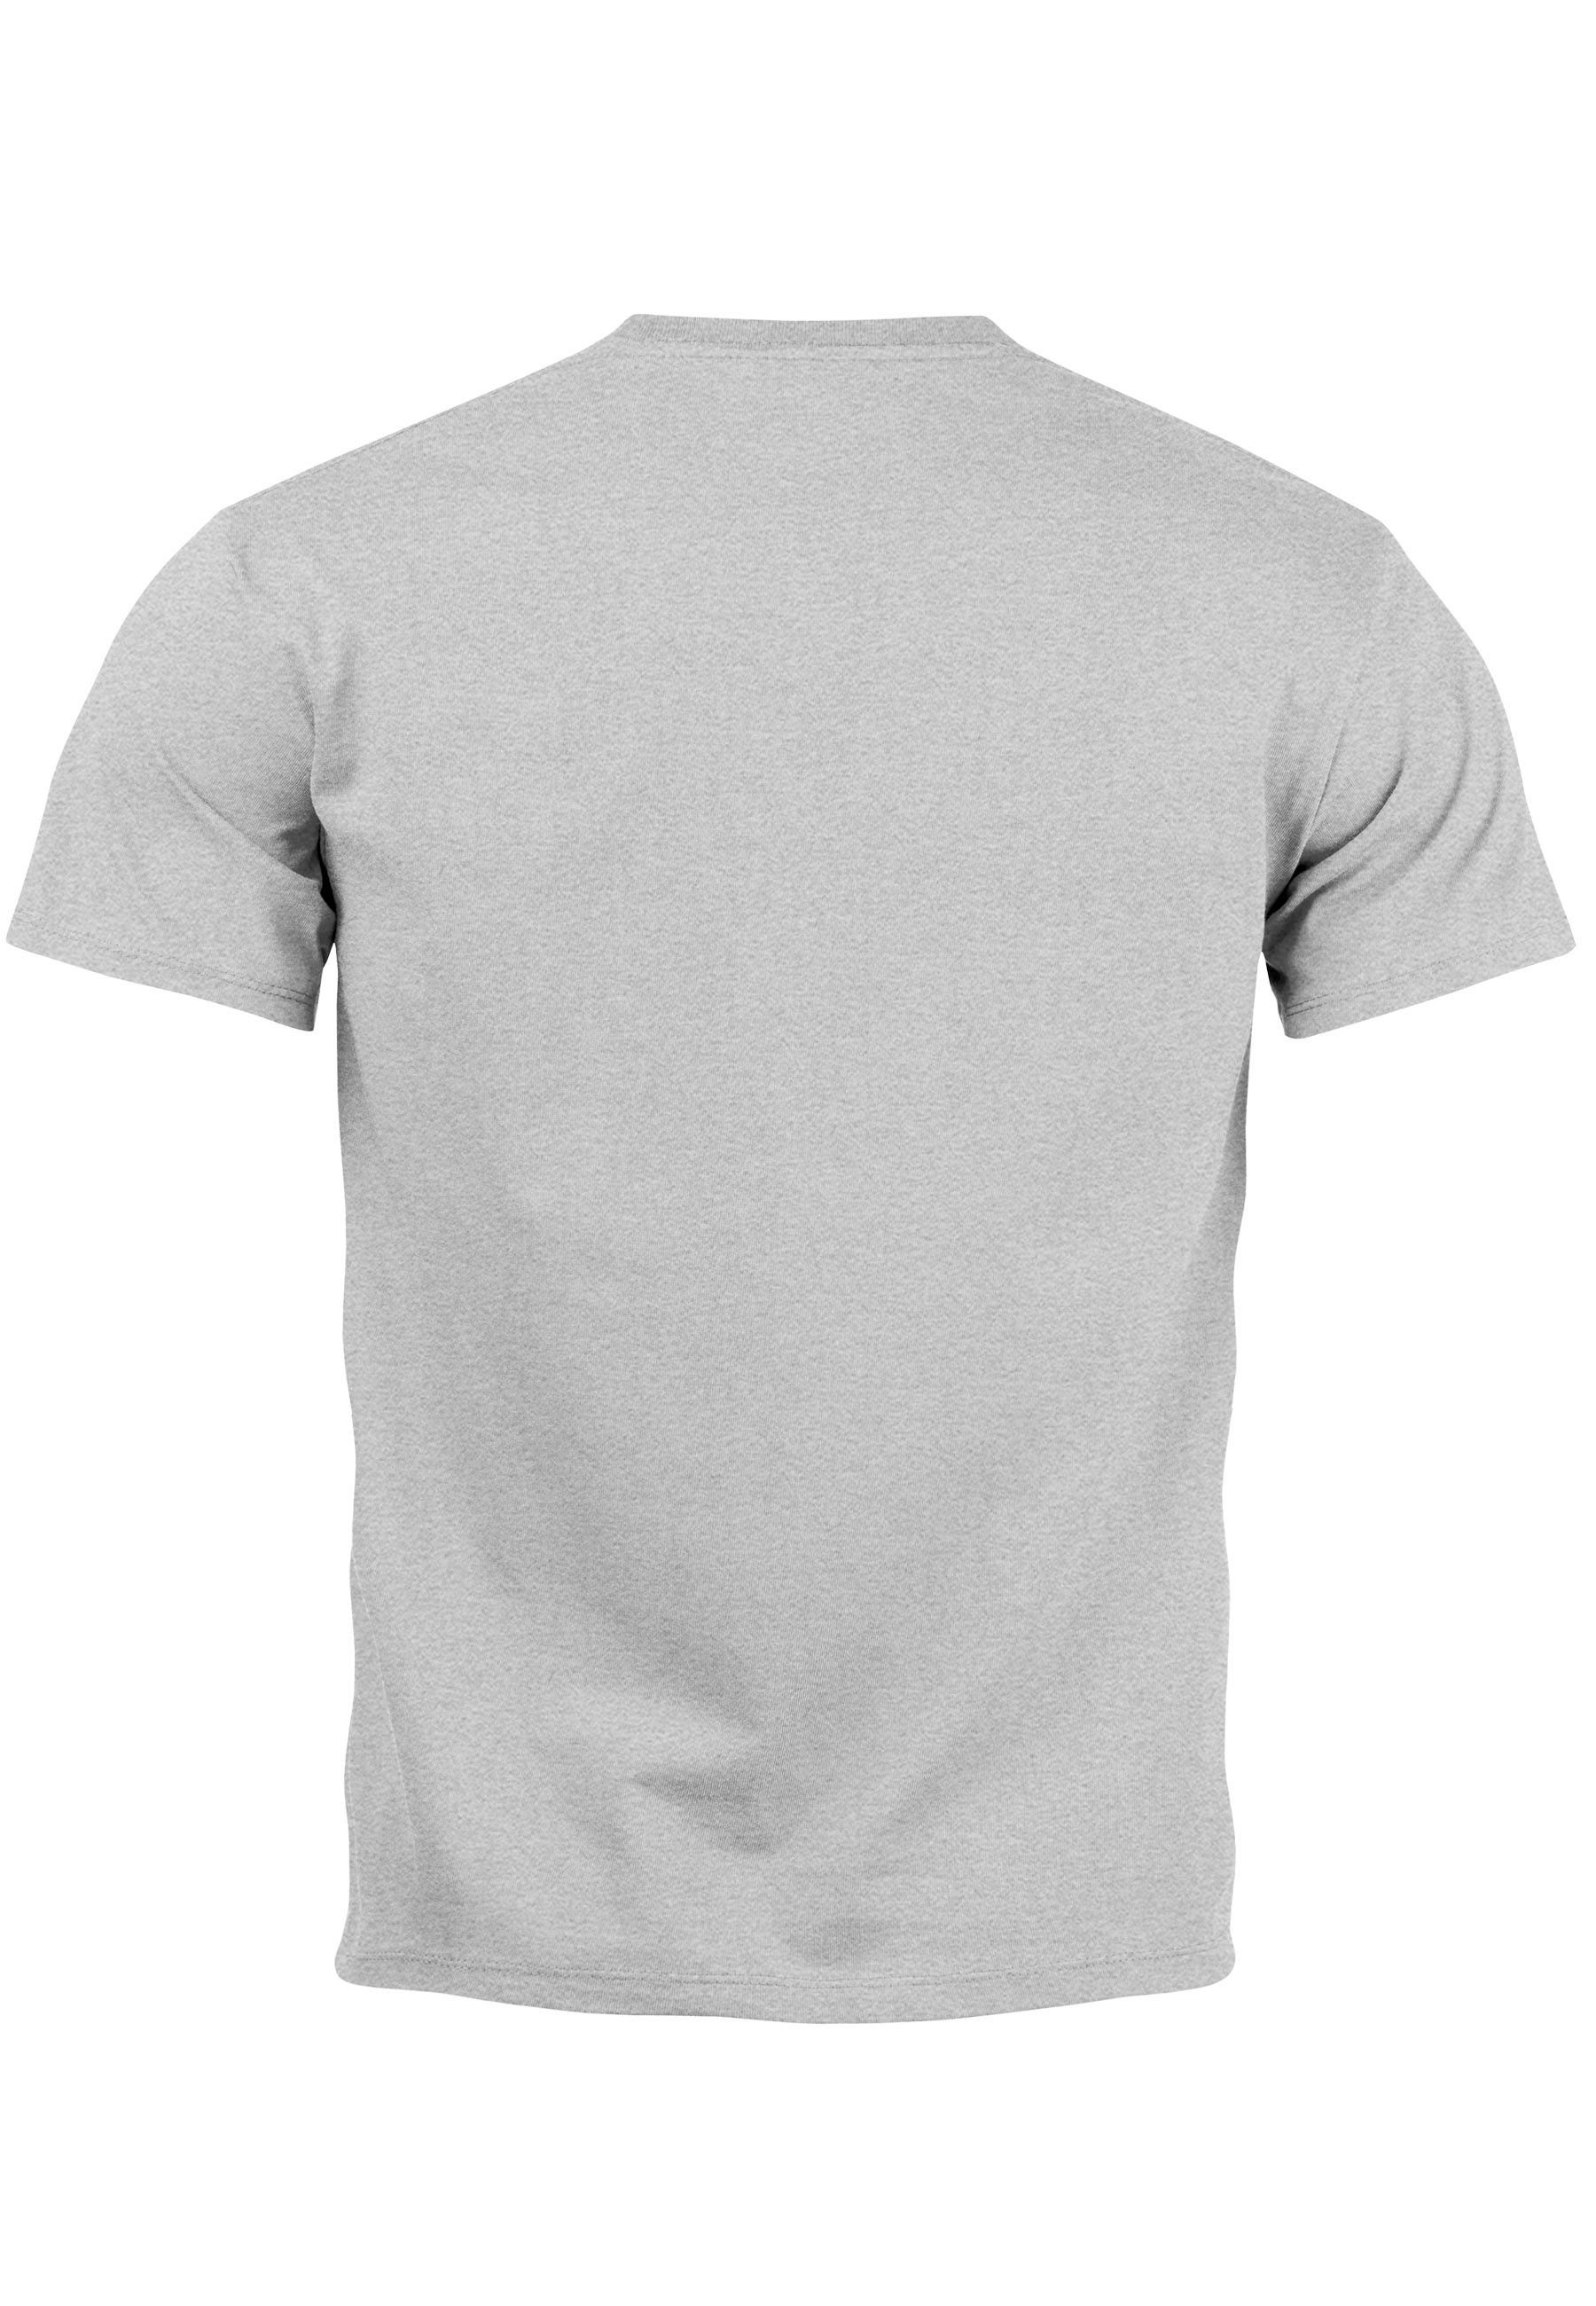 Beach Street Print South Techwear Herren Fashion Text mit Print-Shirt Neverless Aufdruck grau T-Shirt Print